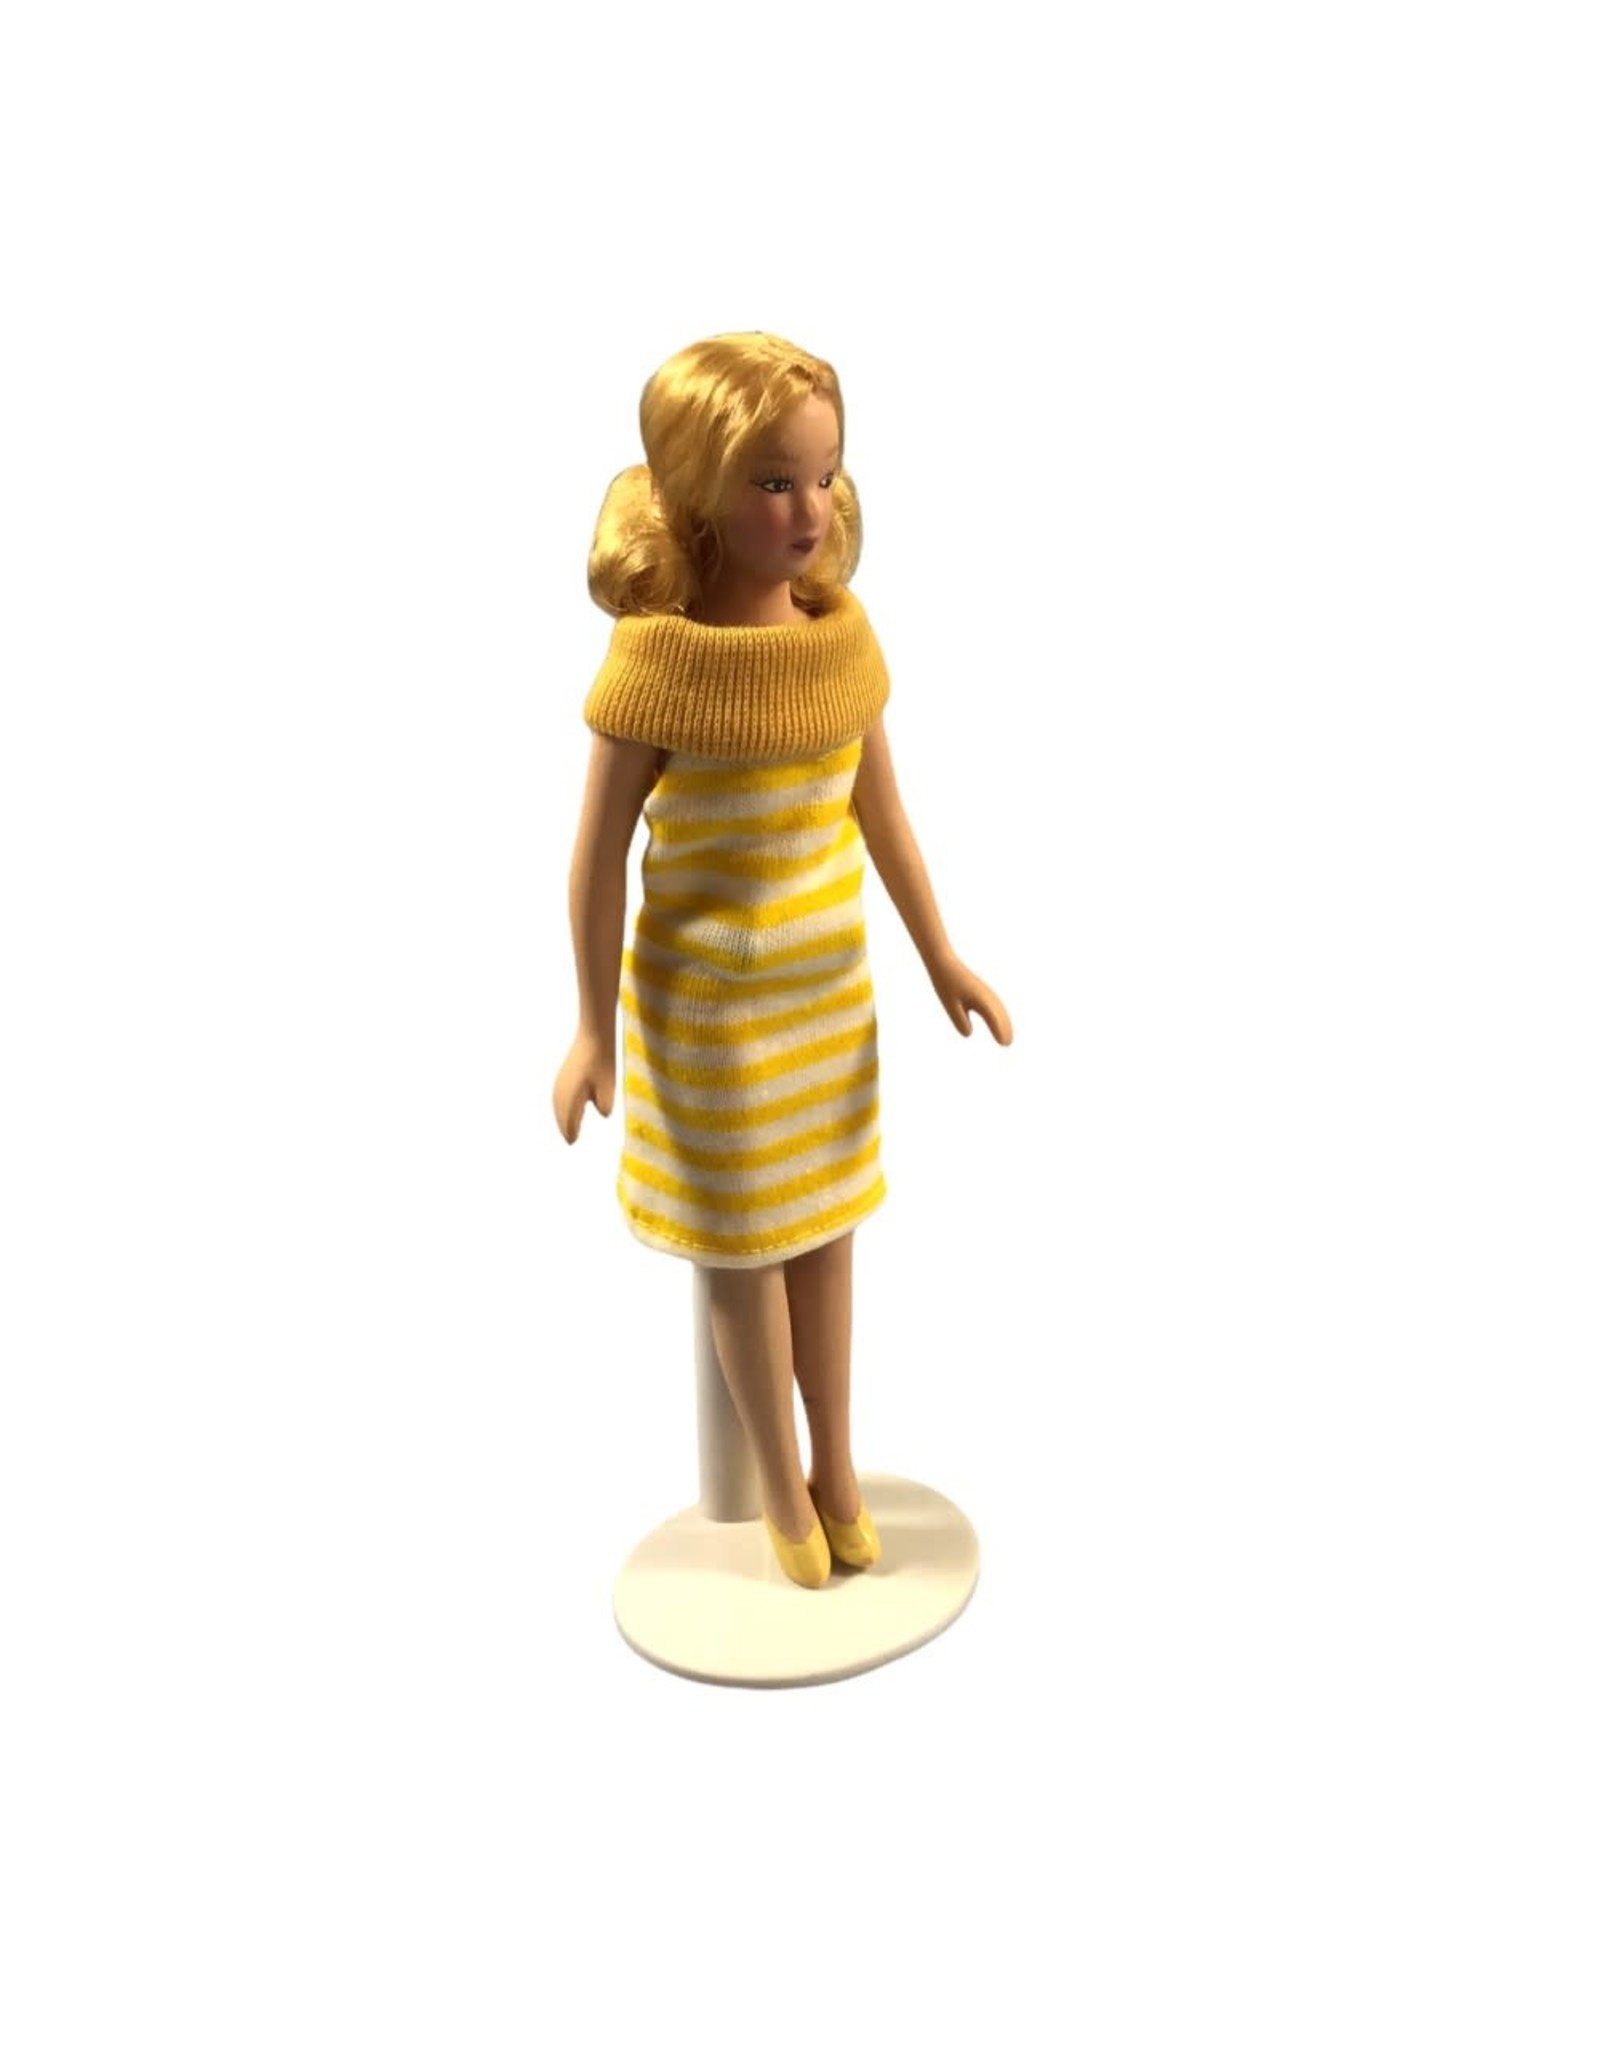 Femme (moderne) miniature 1:12